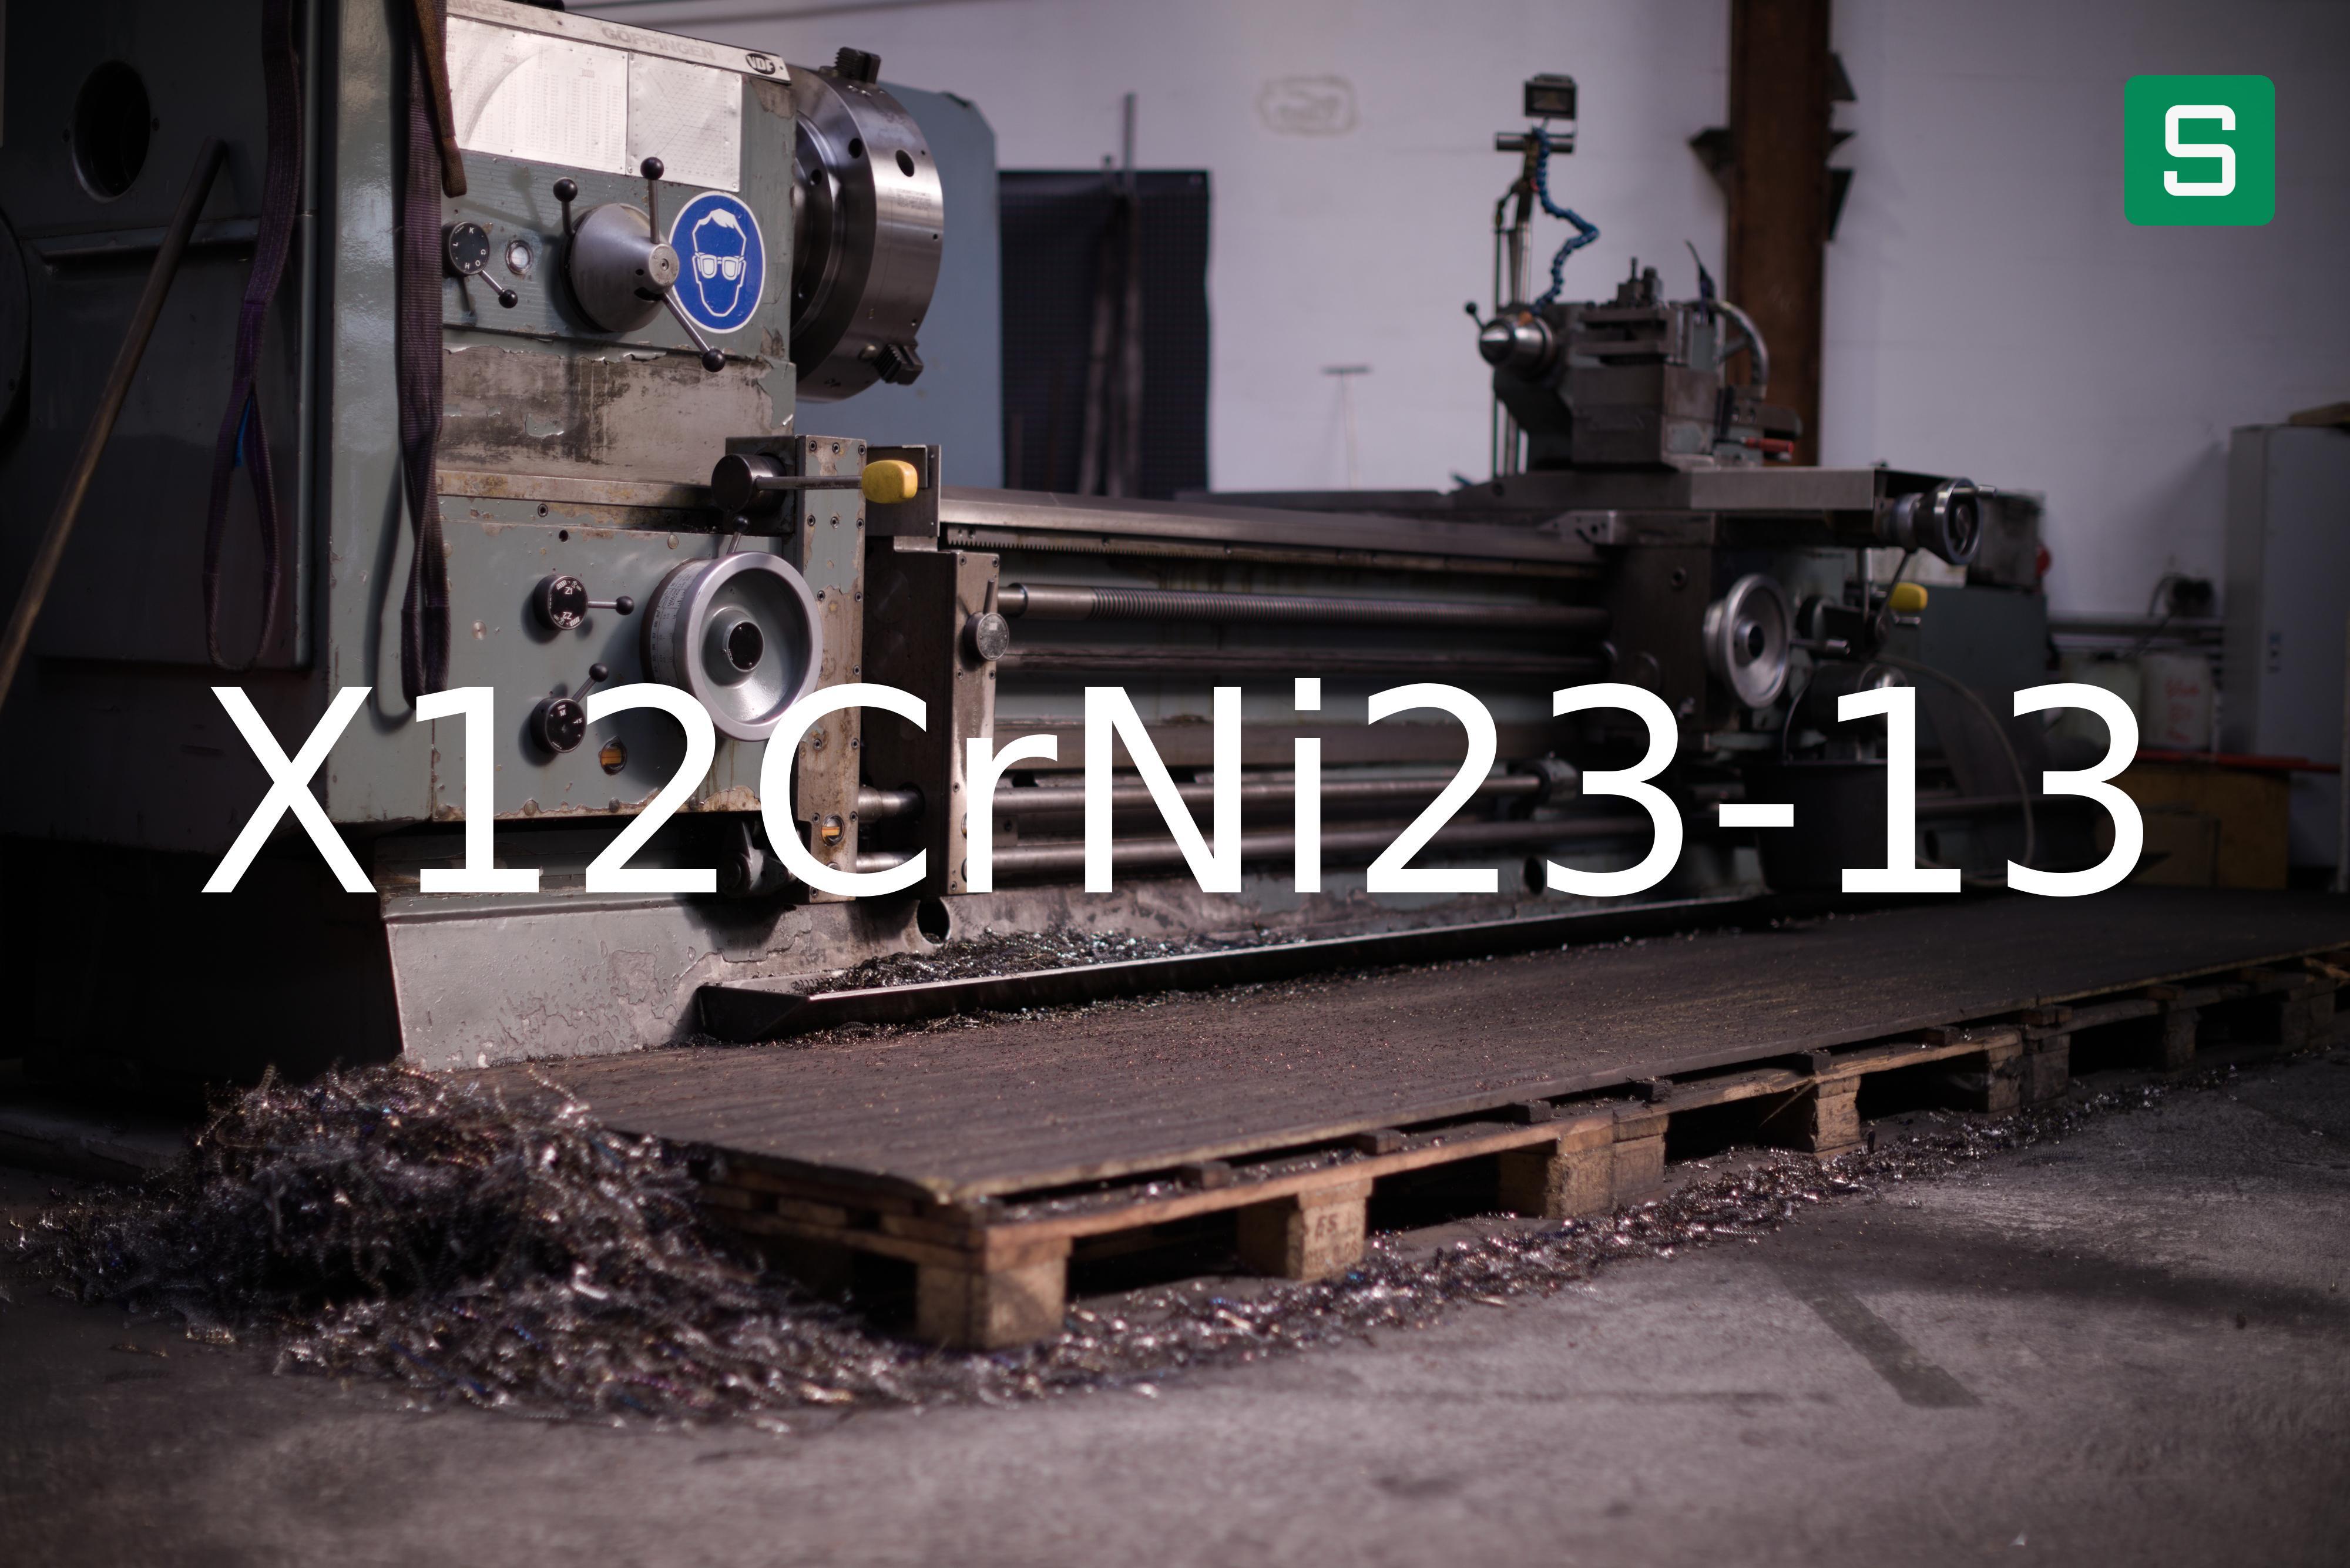 Steel Material: X12CrNi23-13